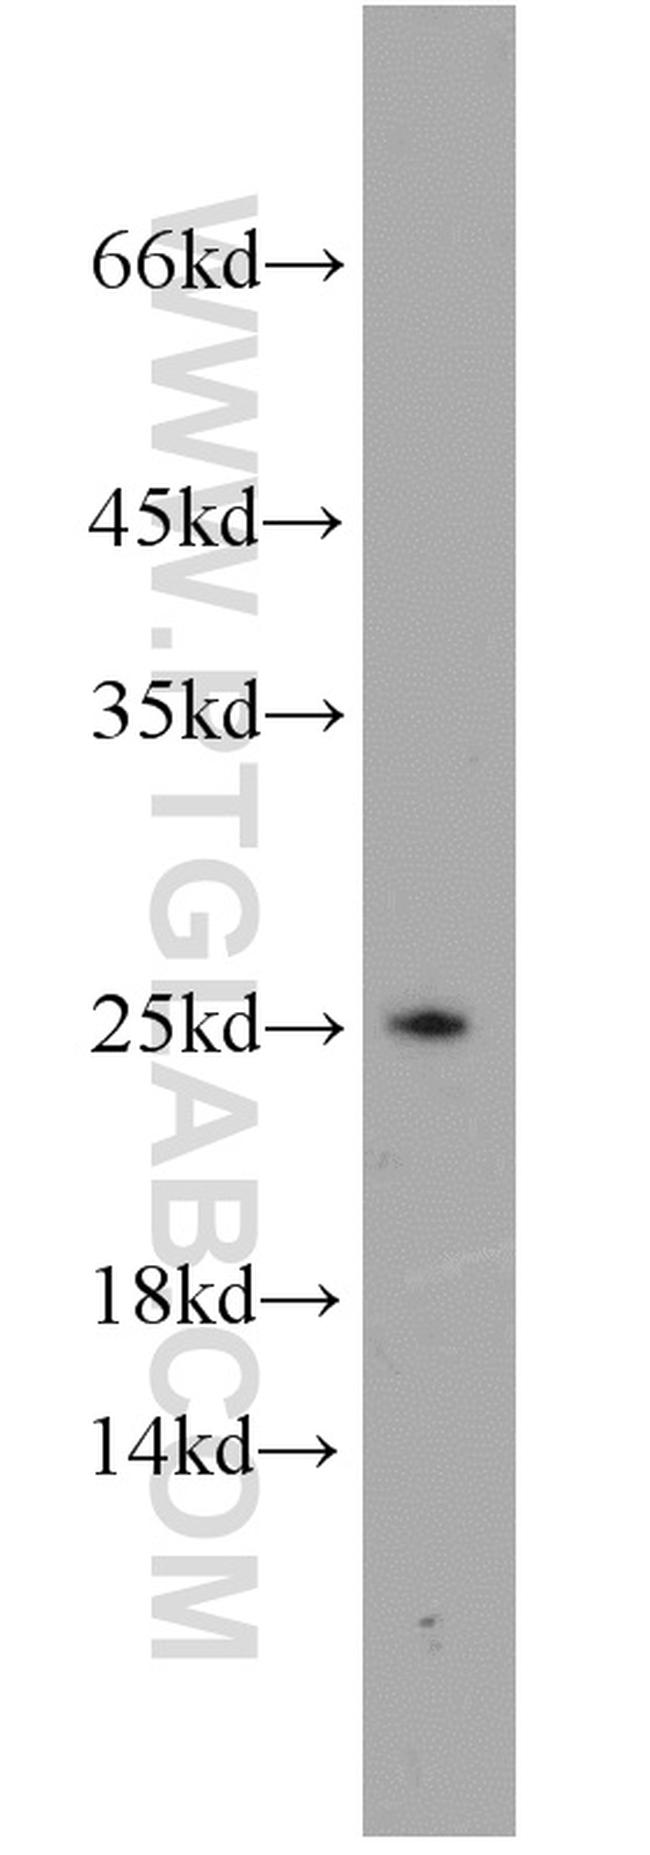 PSMB4 Antibody in Western Blot (WB)